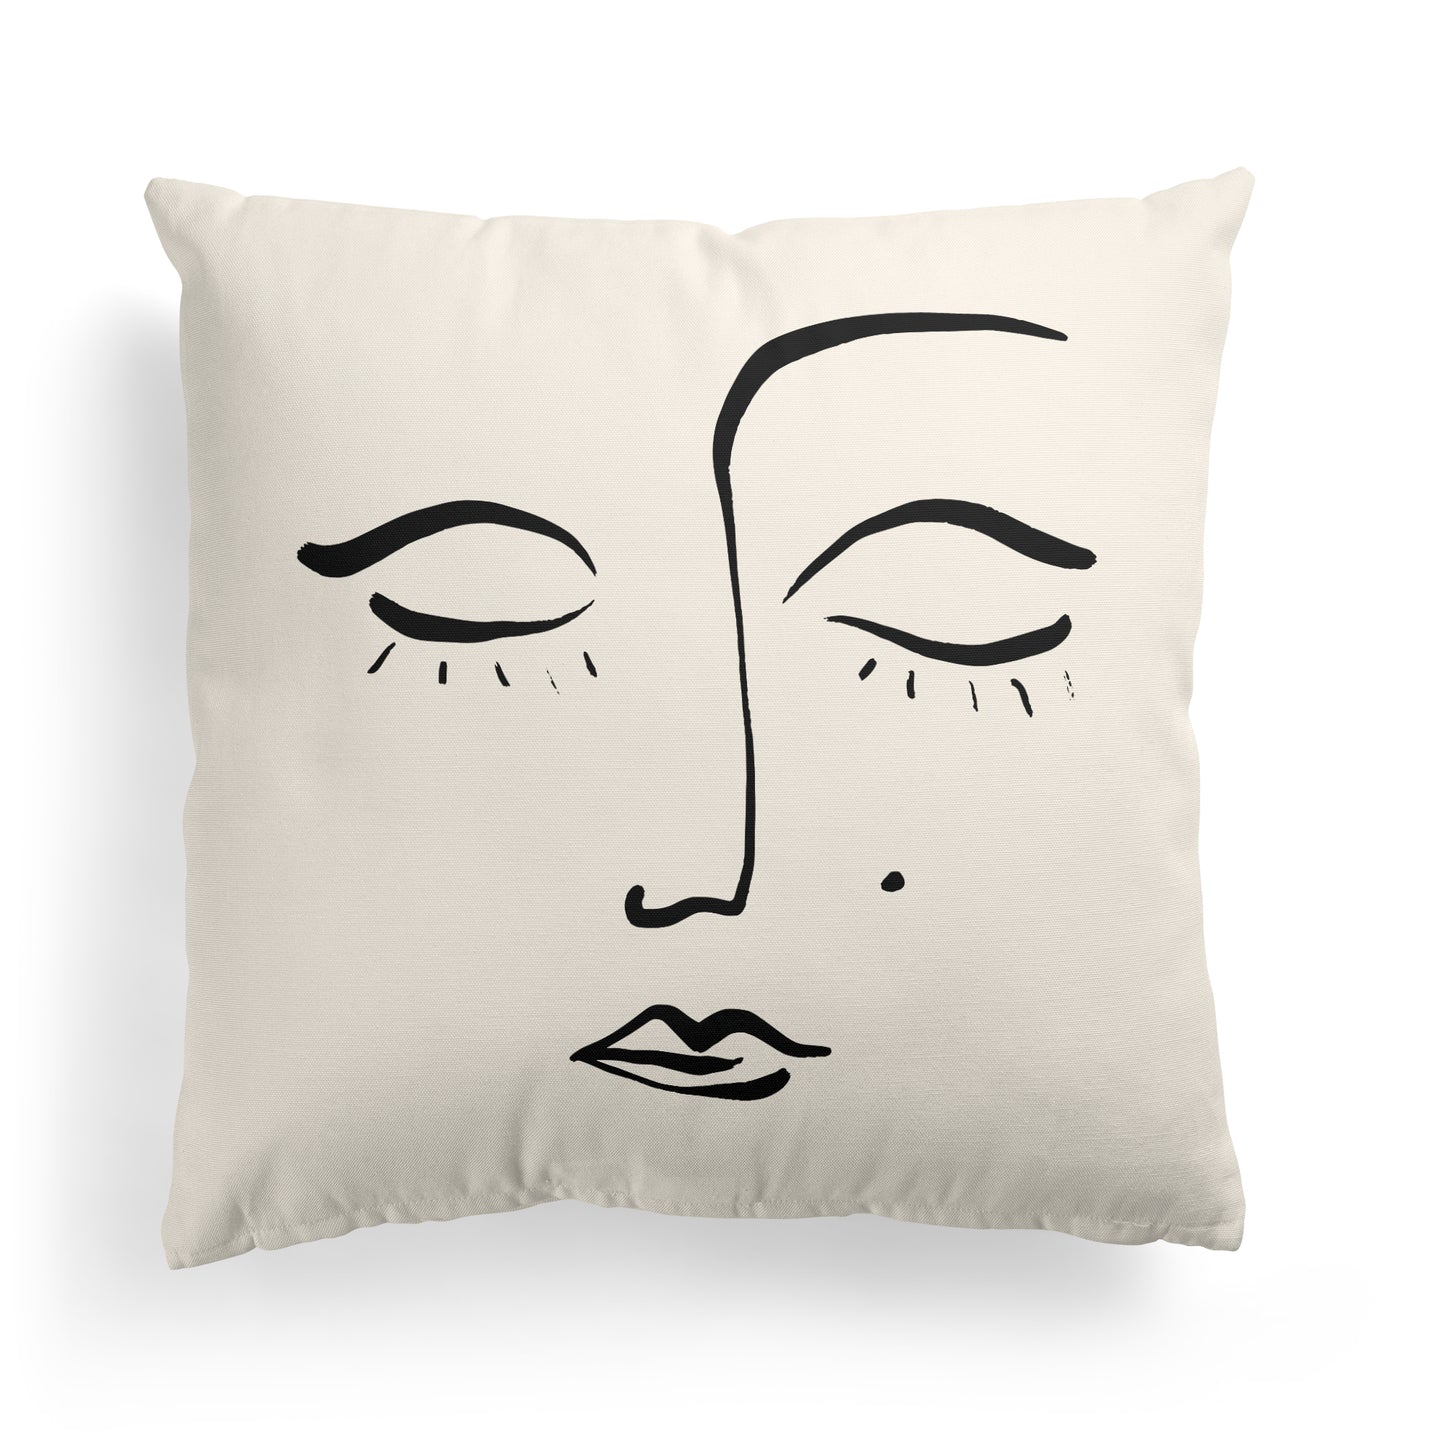 Minimalist Throw Pillow with Sleeping Woman